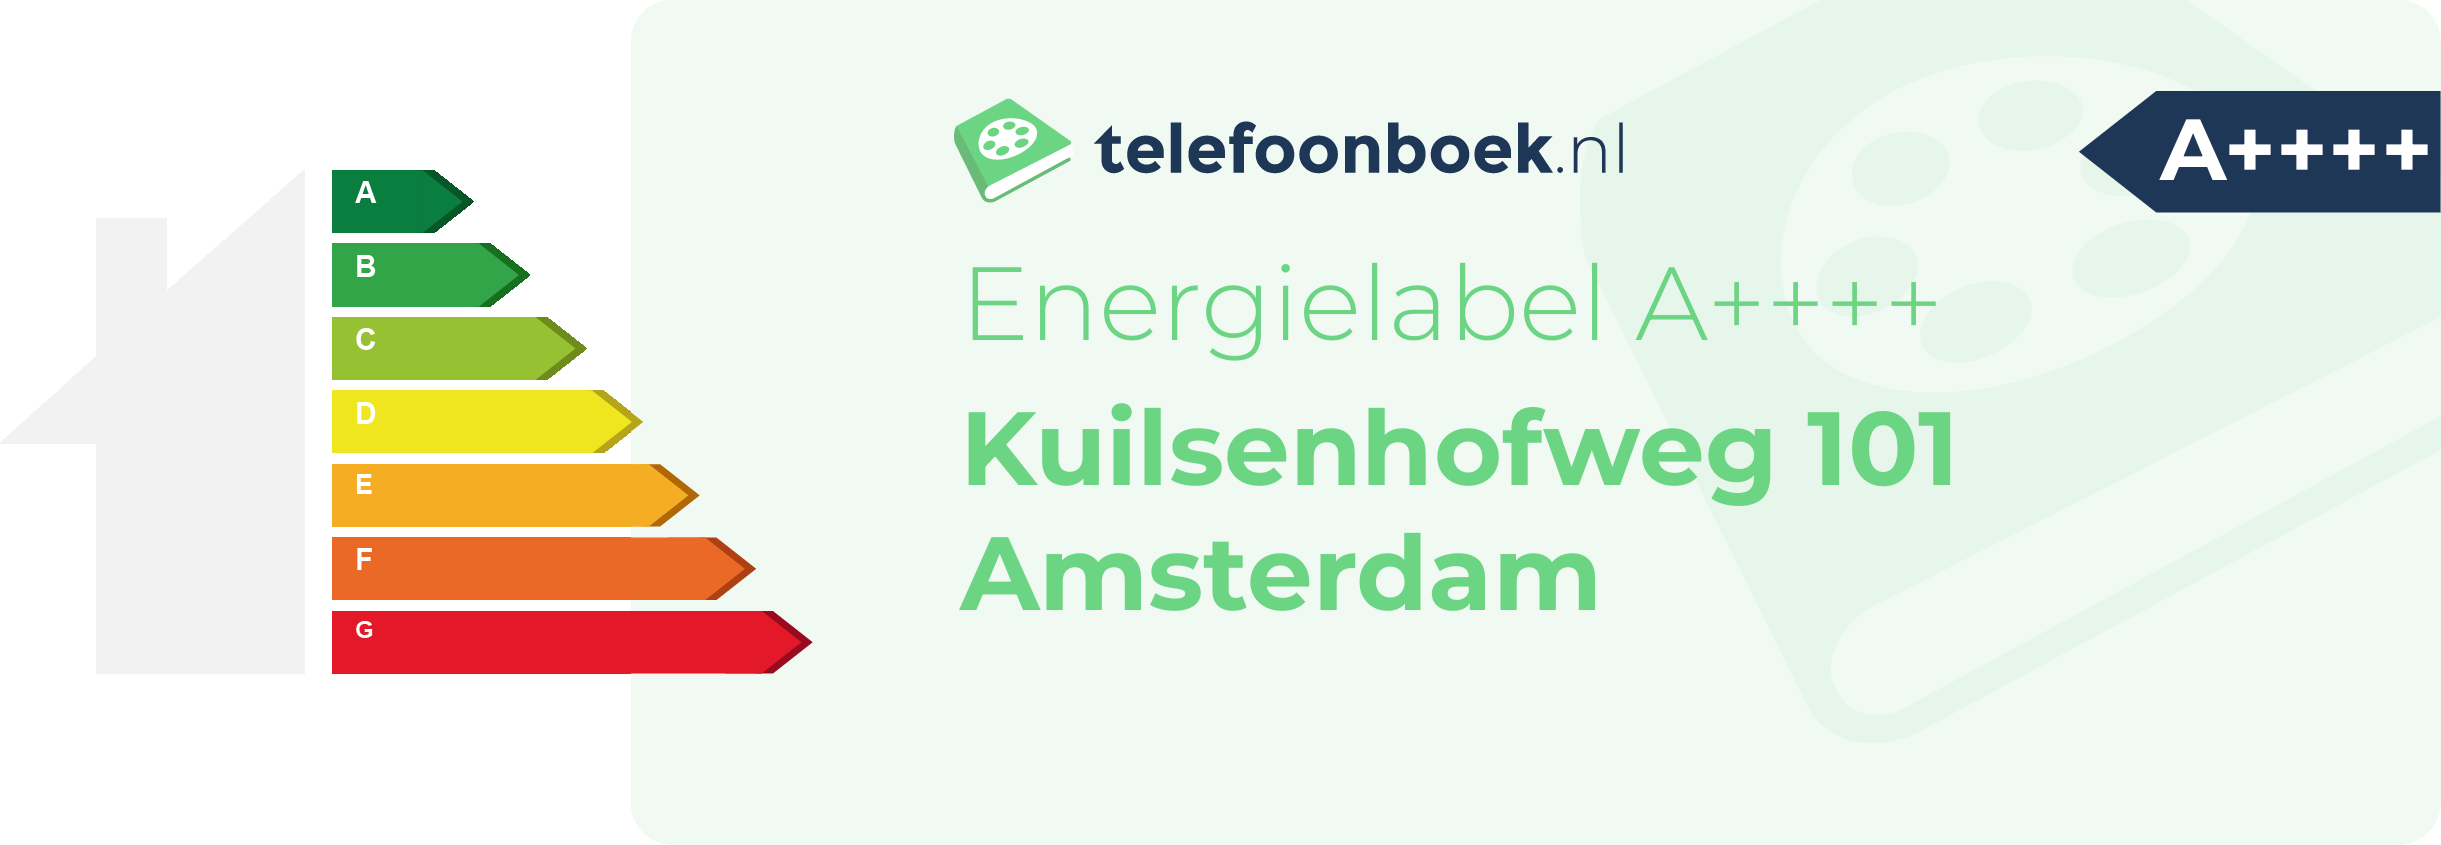 Energielabel Kuilsenhofweg 101 Amsterdam